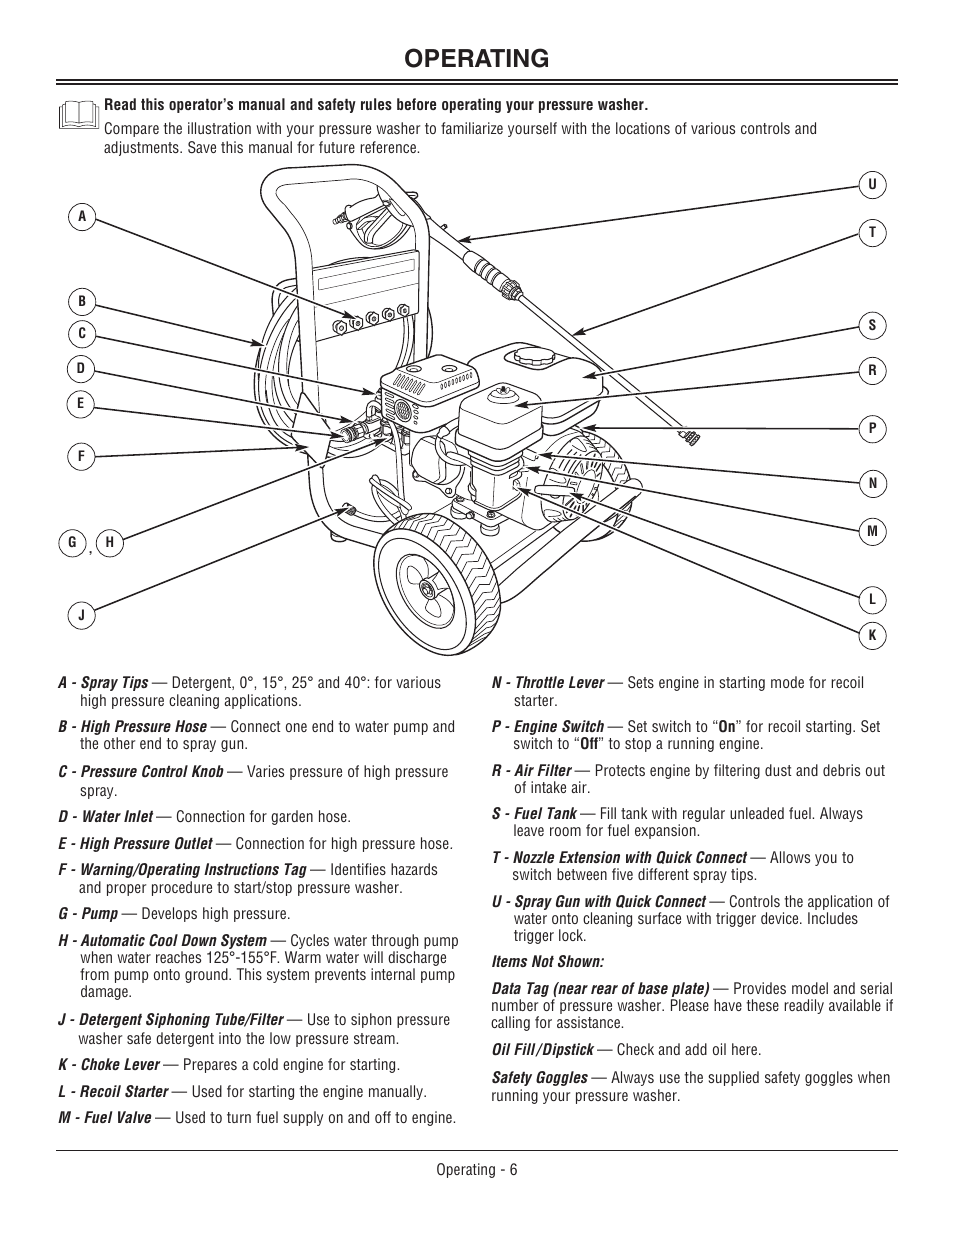 Operating | John Deere OMM156510 User Manual | Page 10 / 24